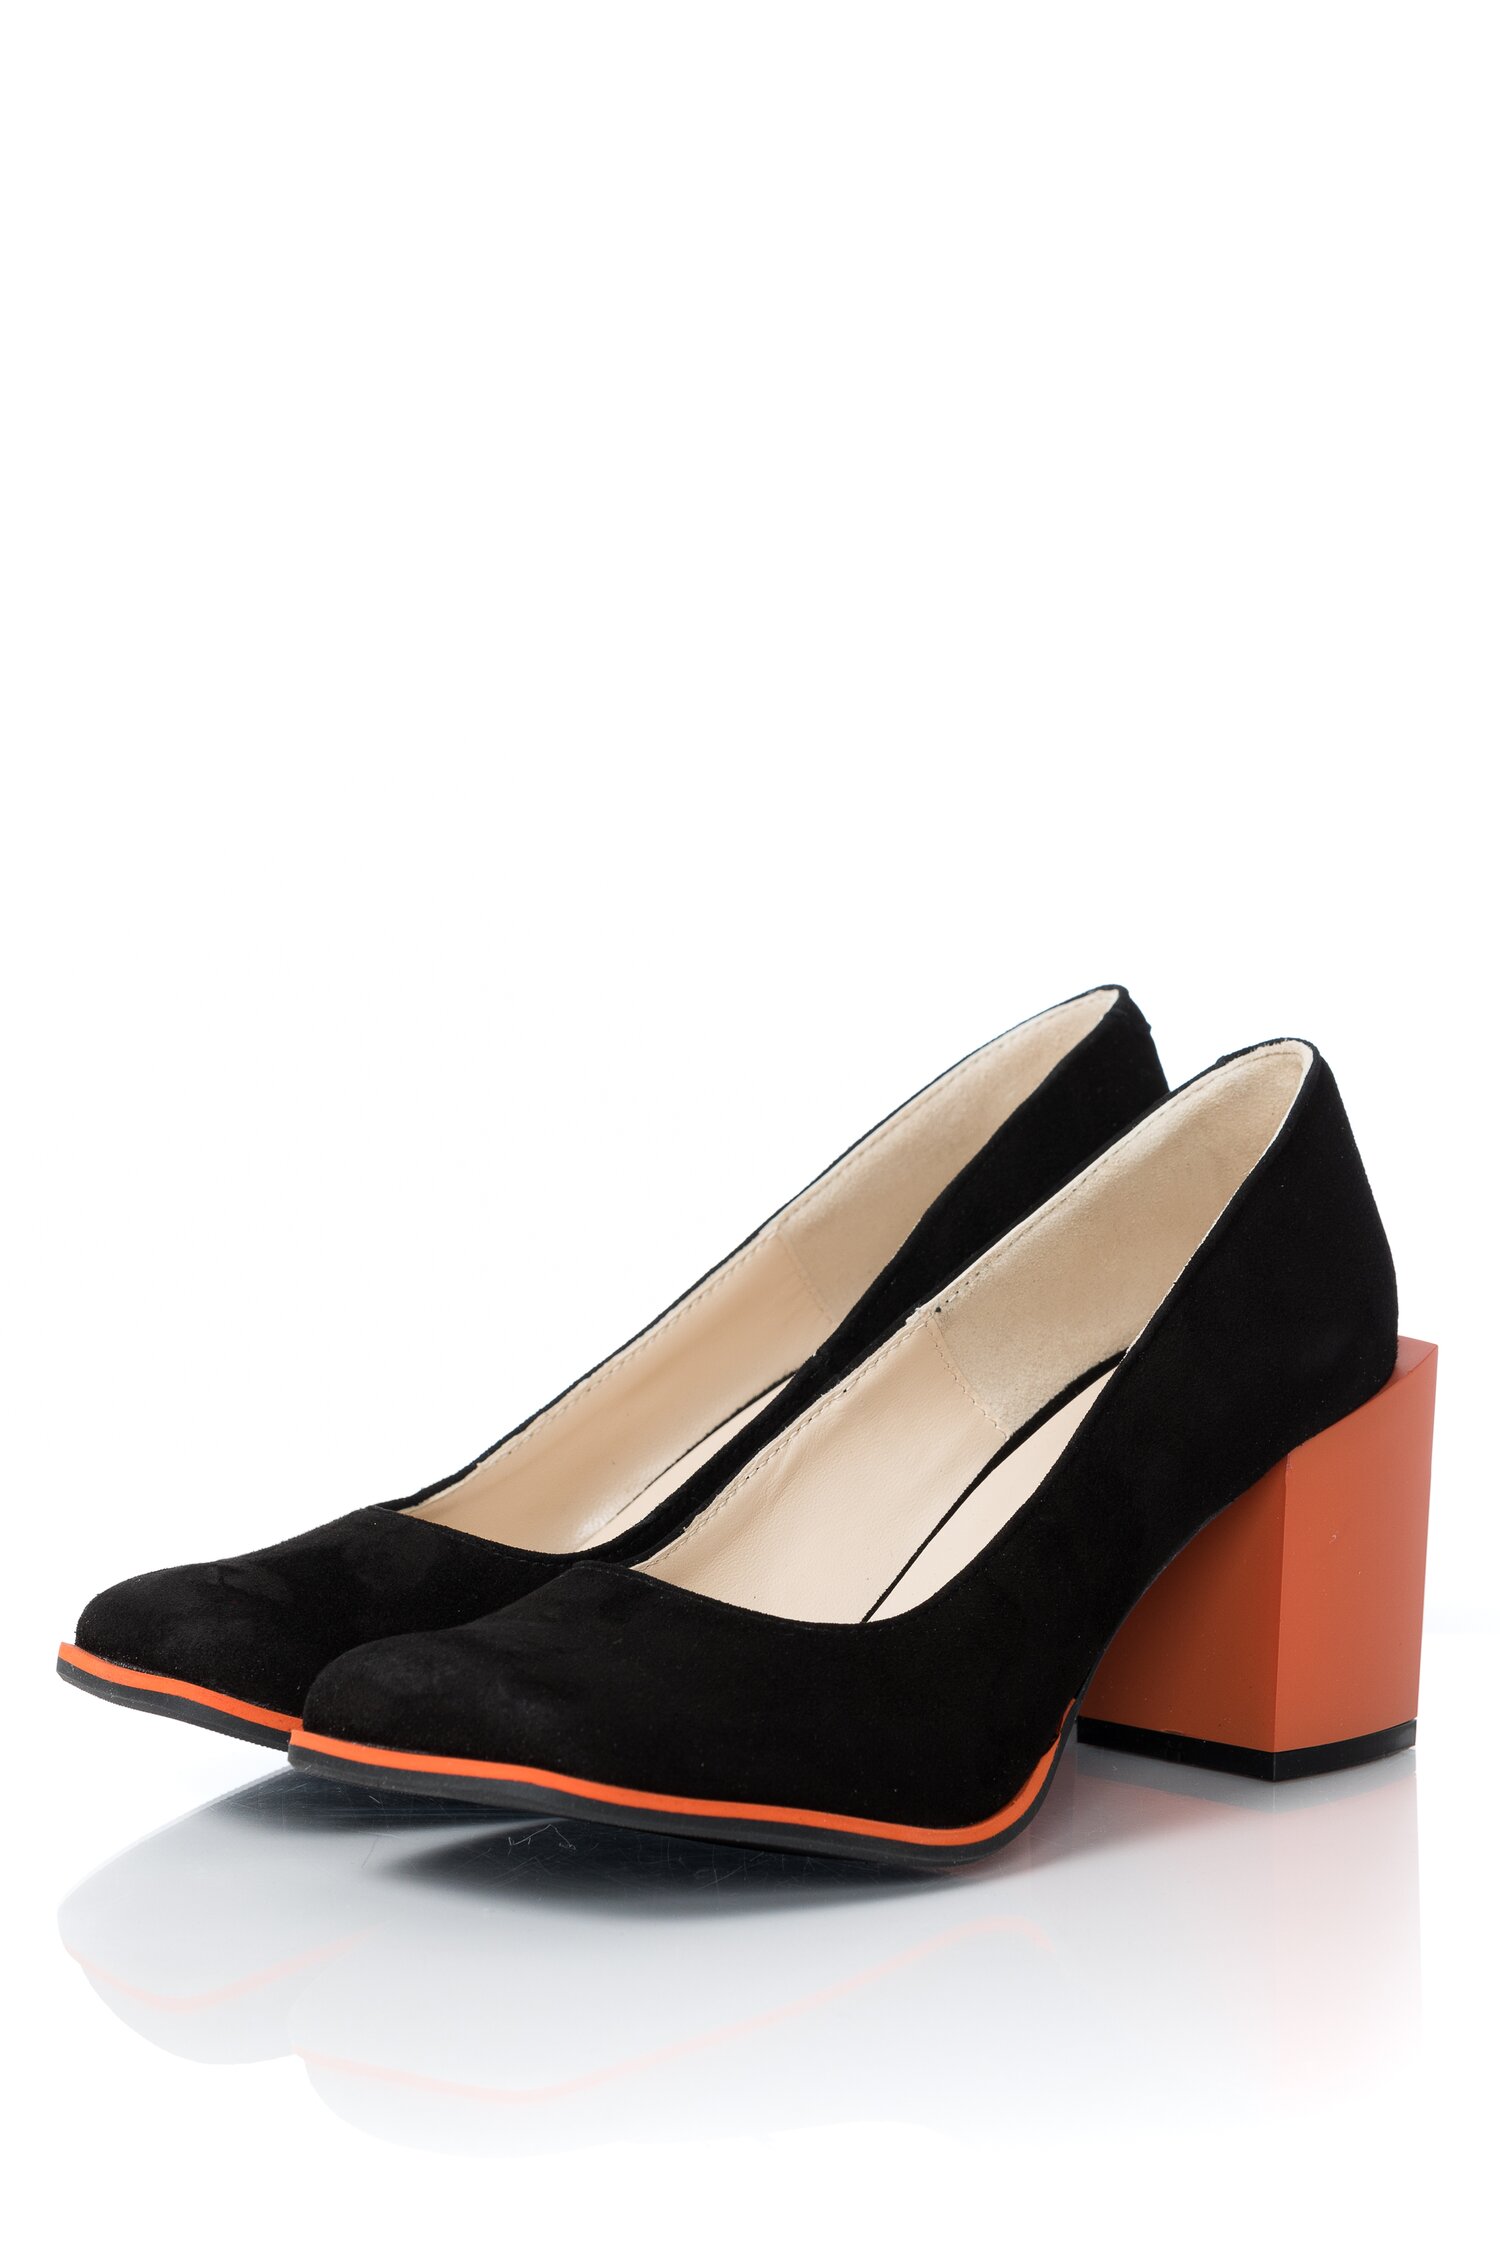 Pantofi Tania negri cu toc portocaliu dyfashion.ro imagine 2022 13clothing.ro